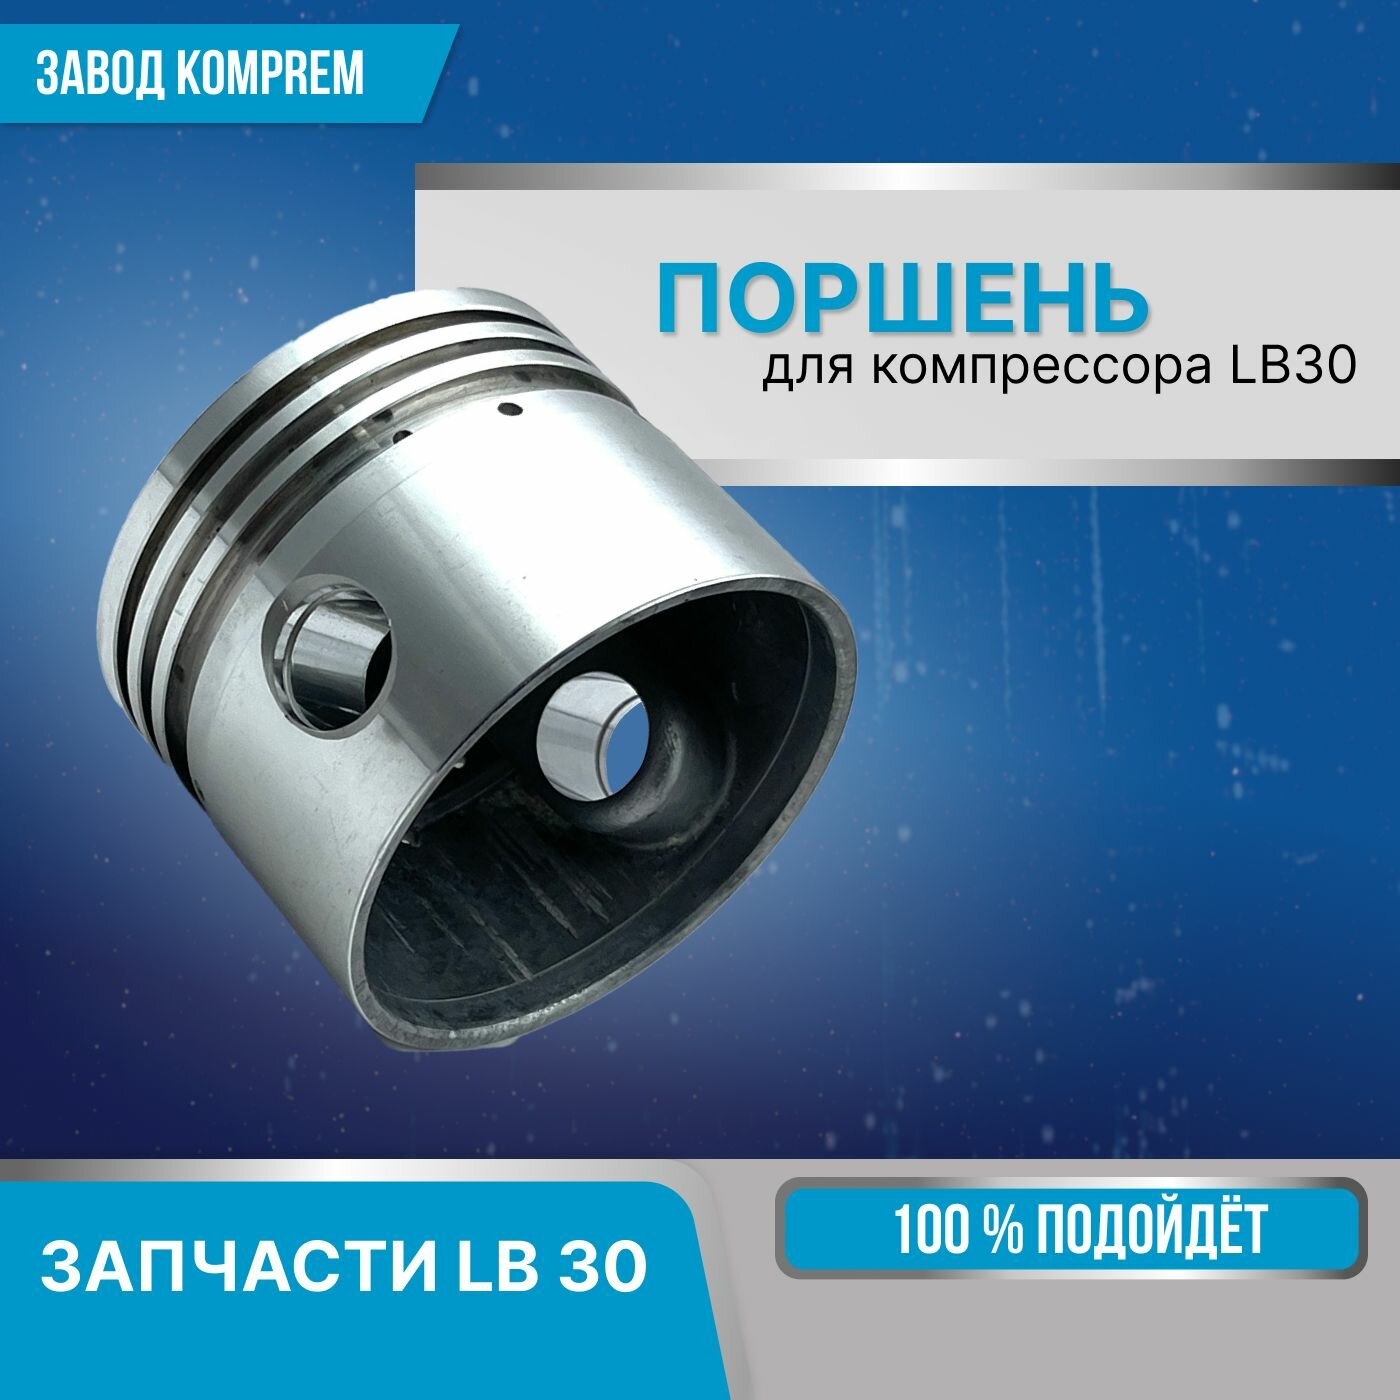 Поршень для воздушного компрессора LB30 Komprem диаметр 65 мм.